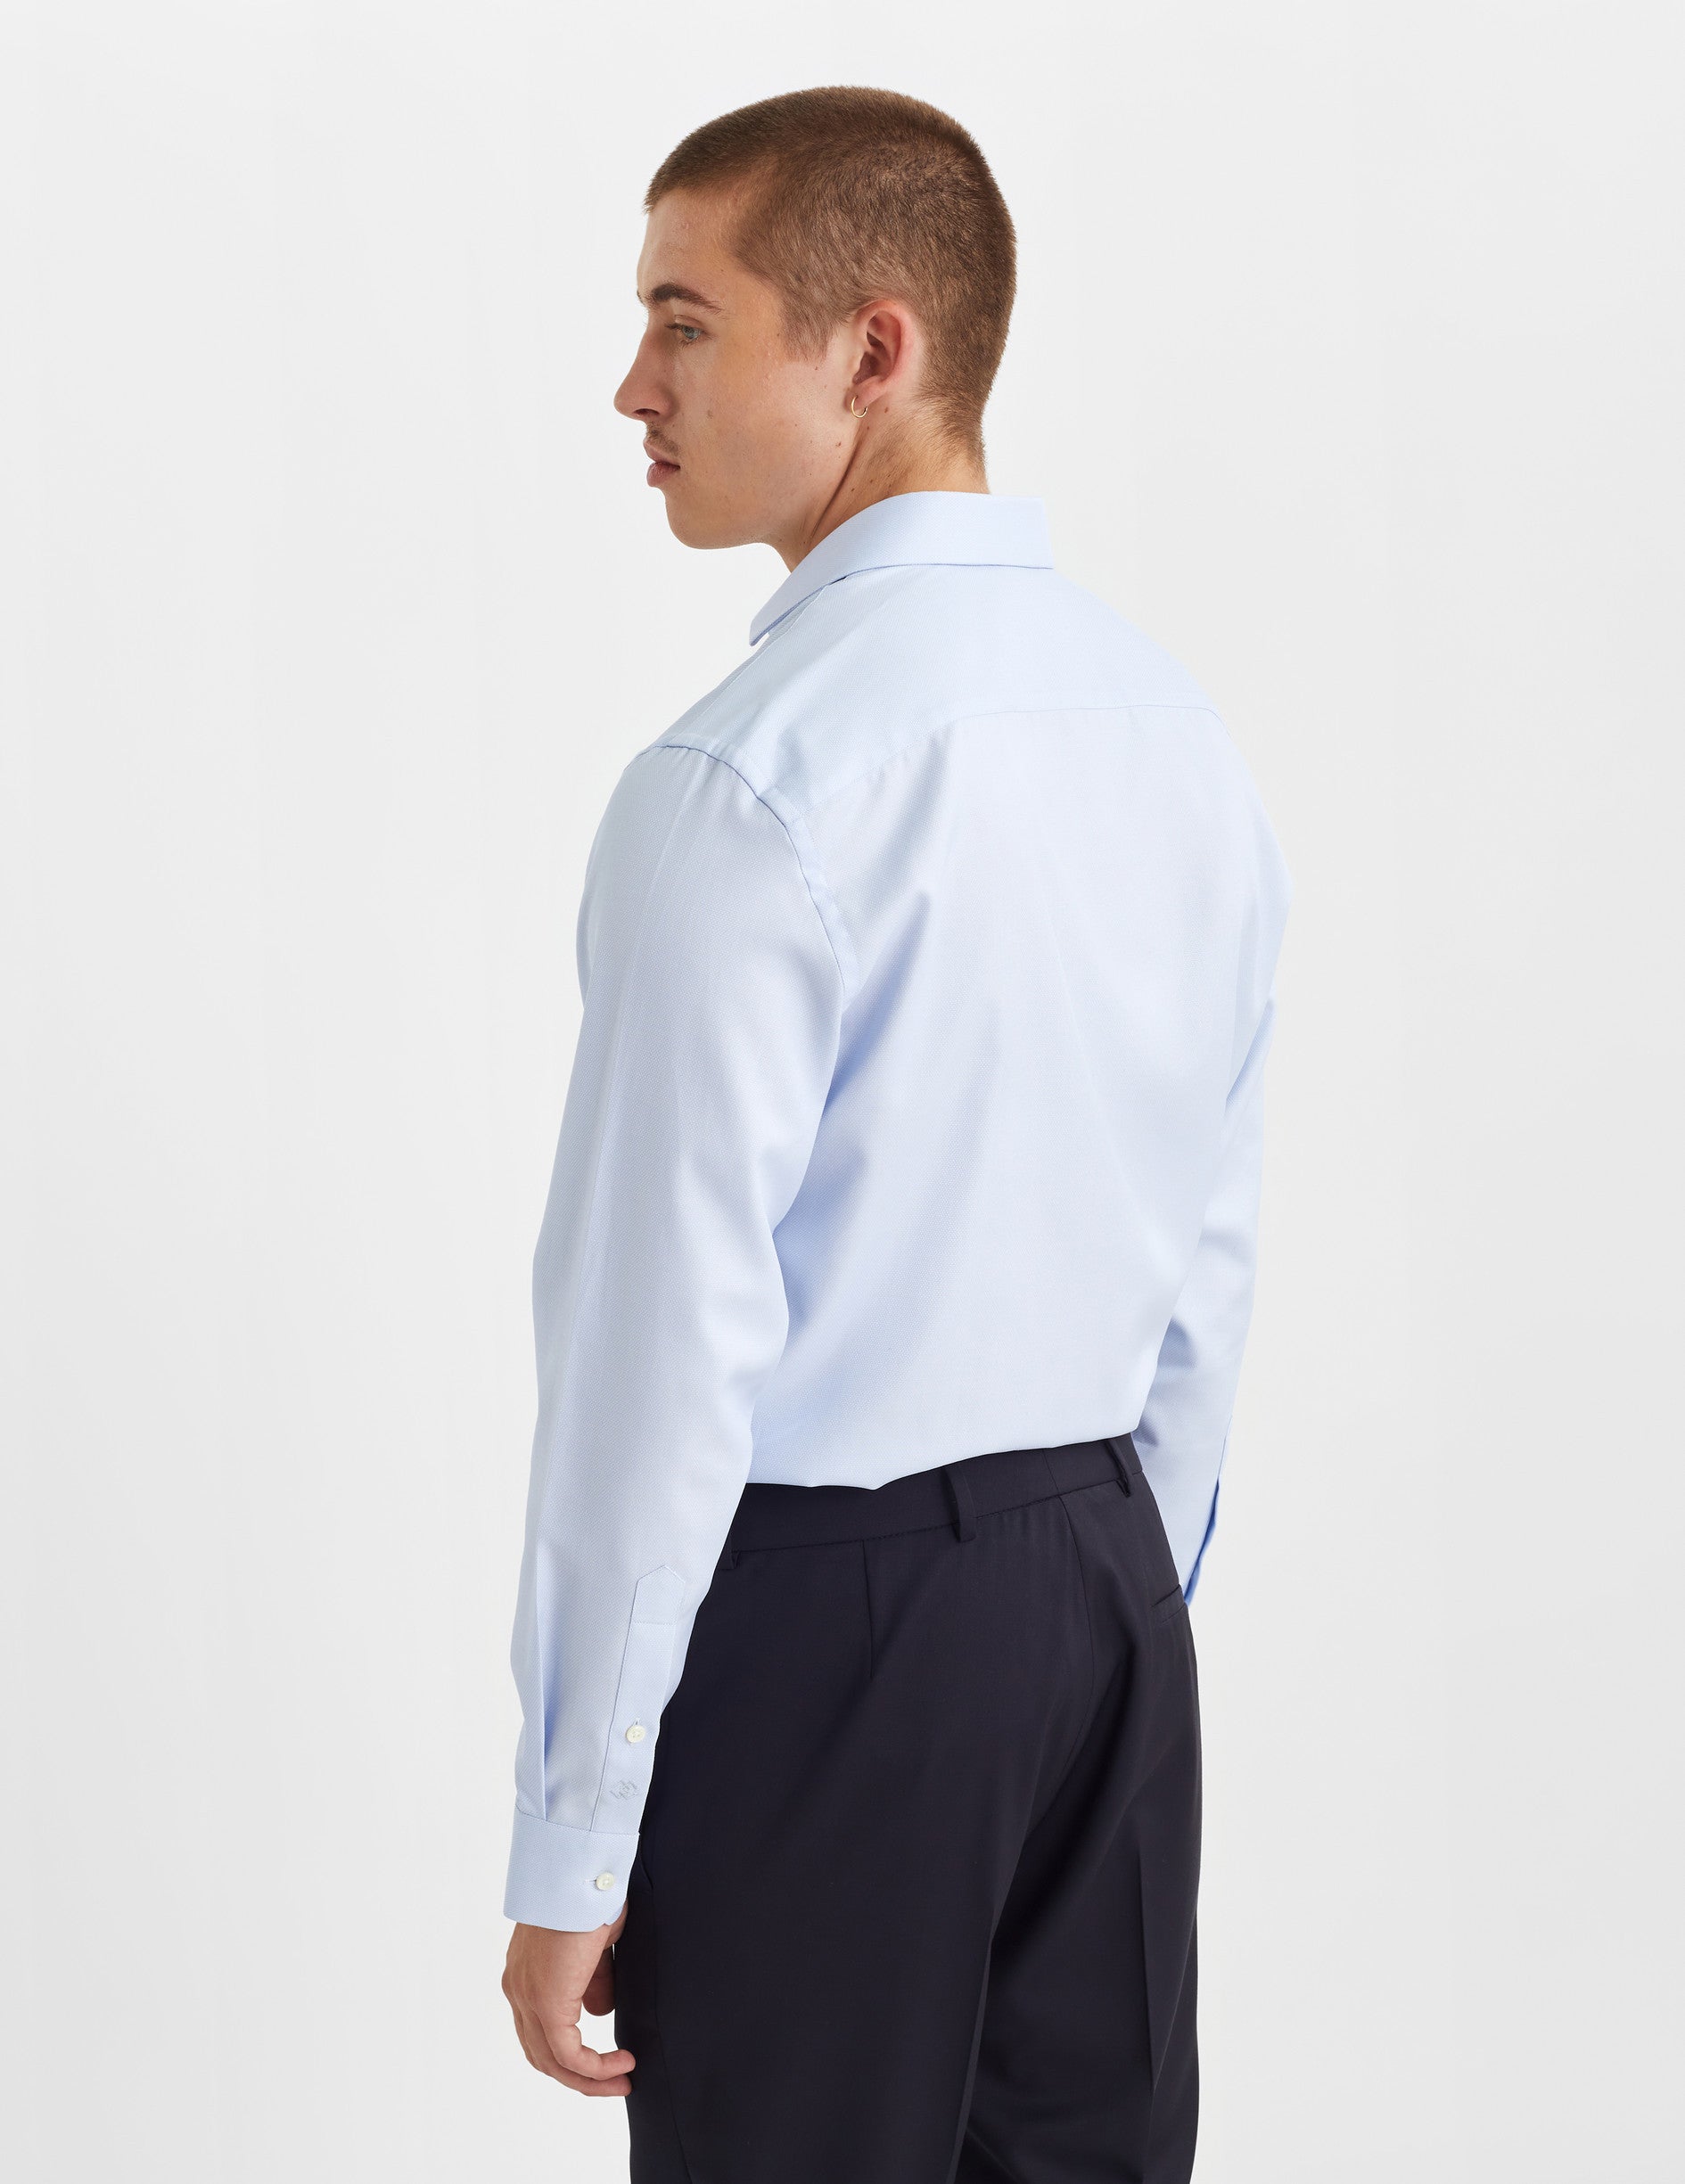 Semi-fitted blue shirt - Shaped - Italian Collar